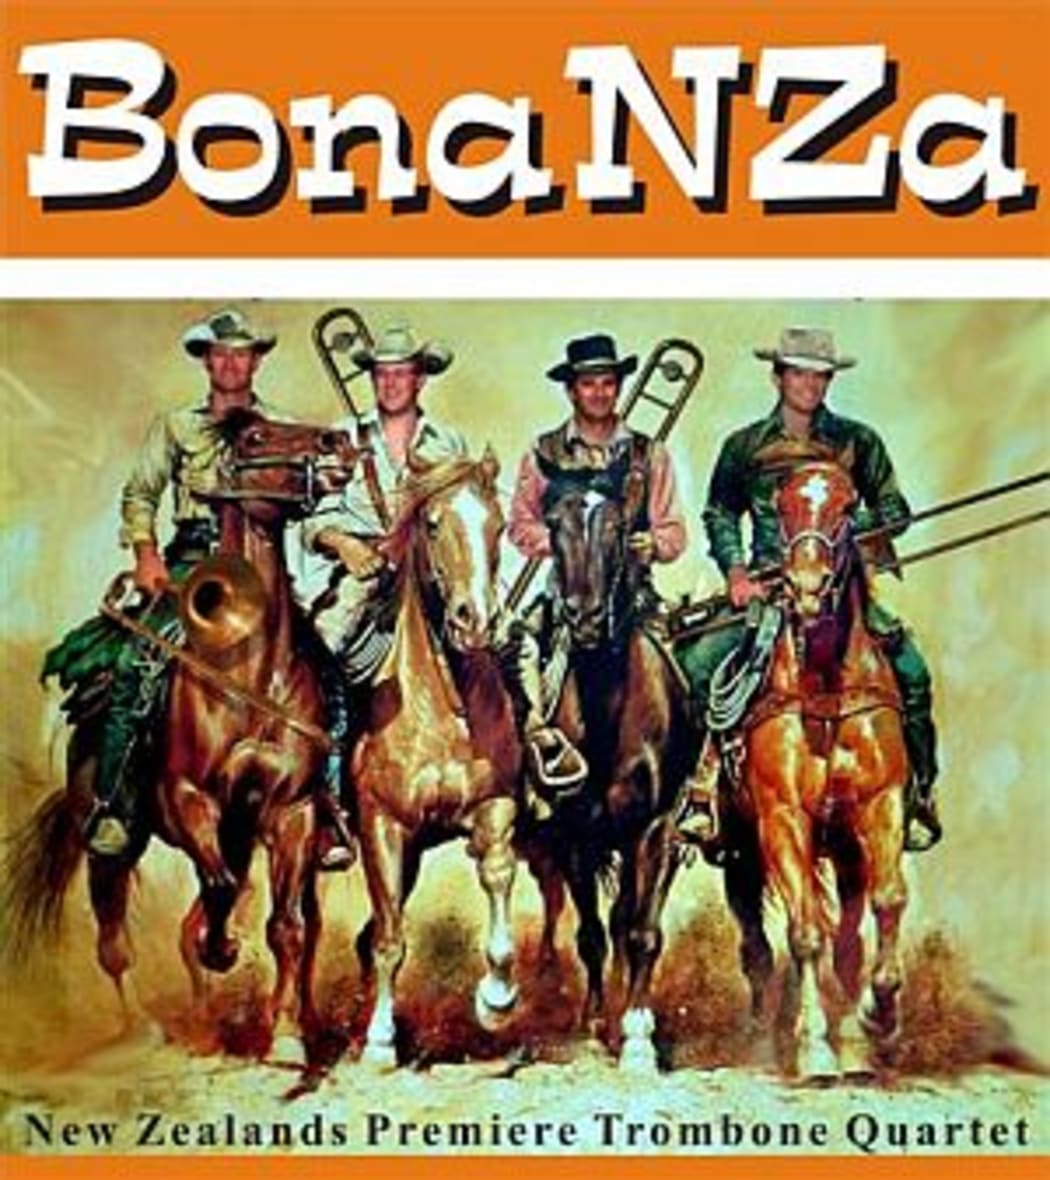 BonaNZa is NZ’s premier trombone quartet